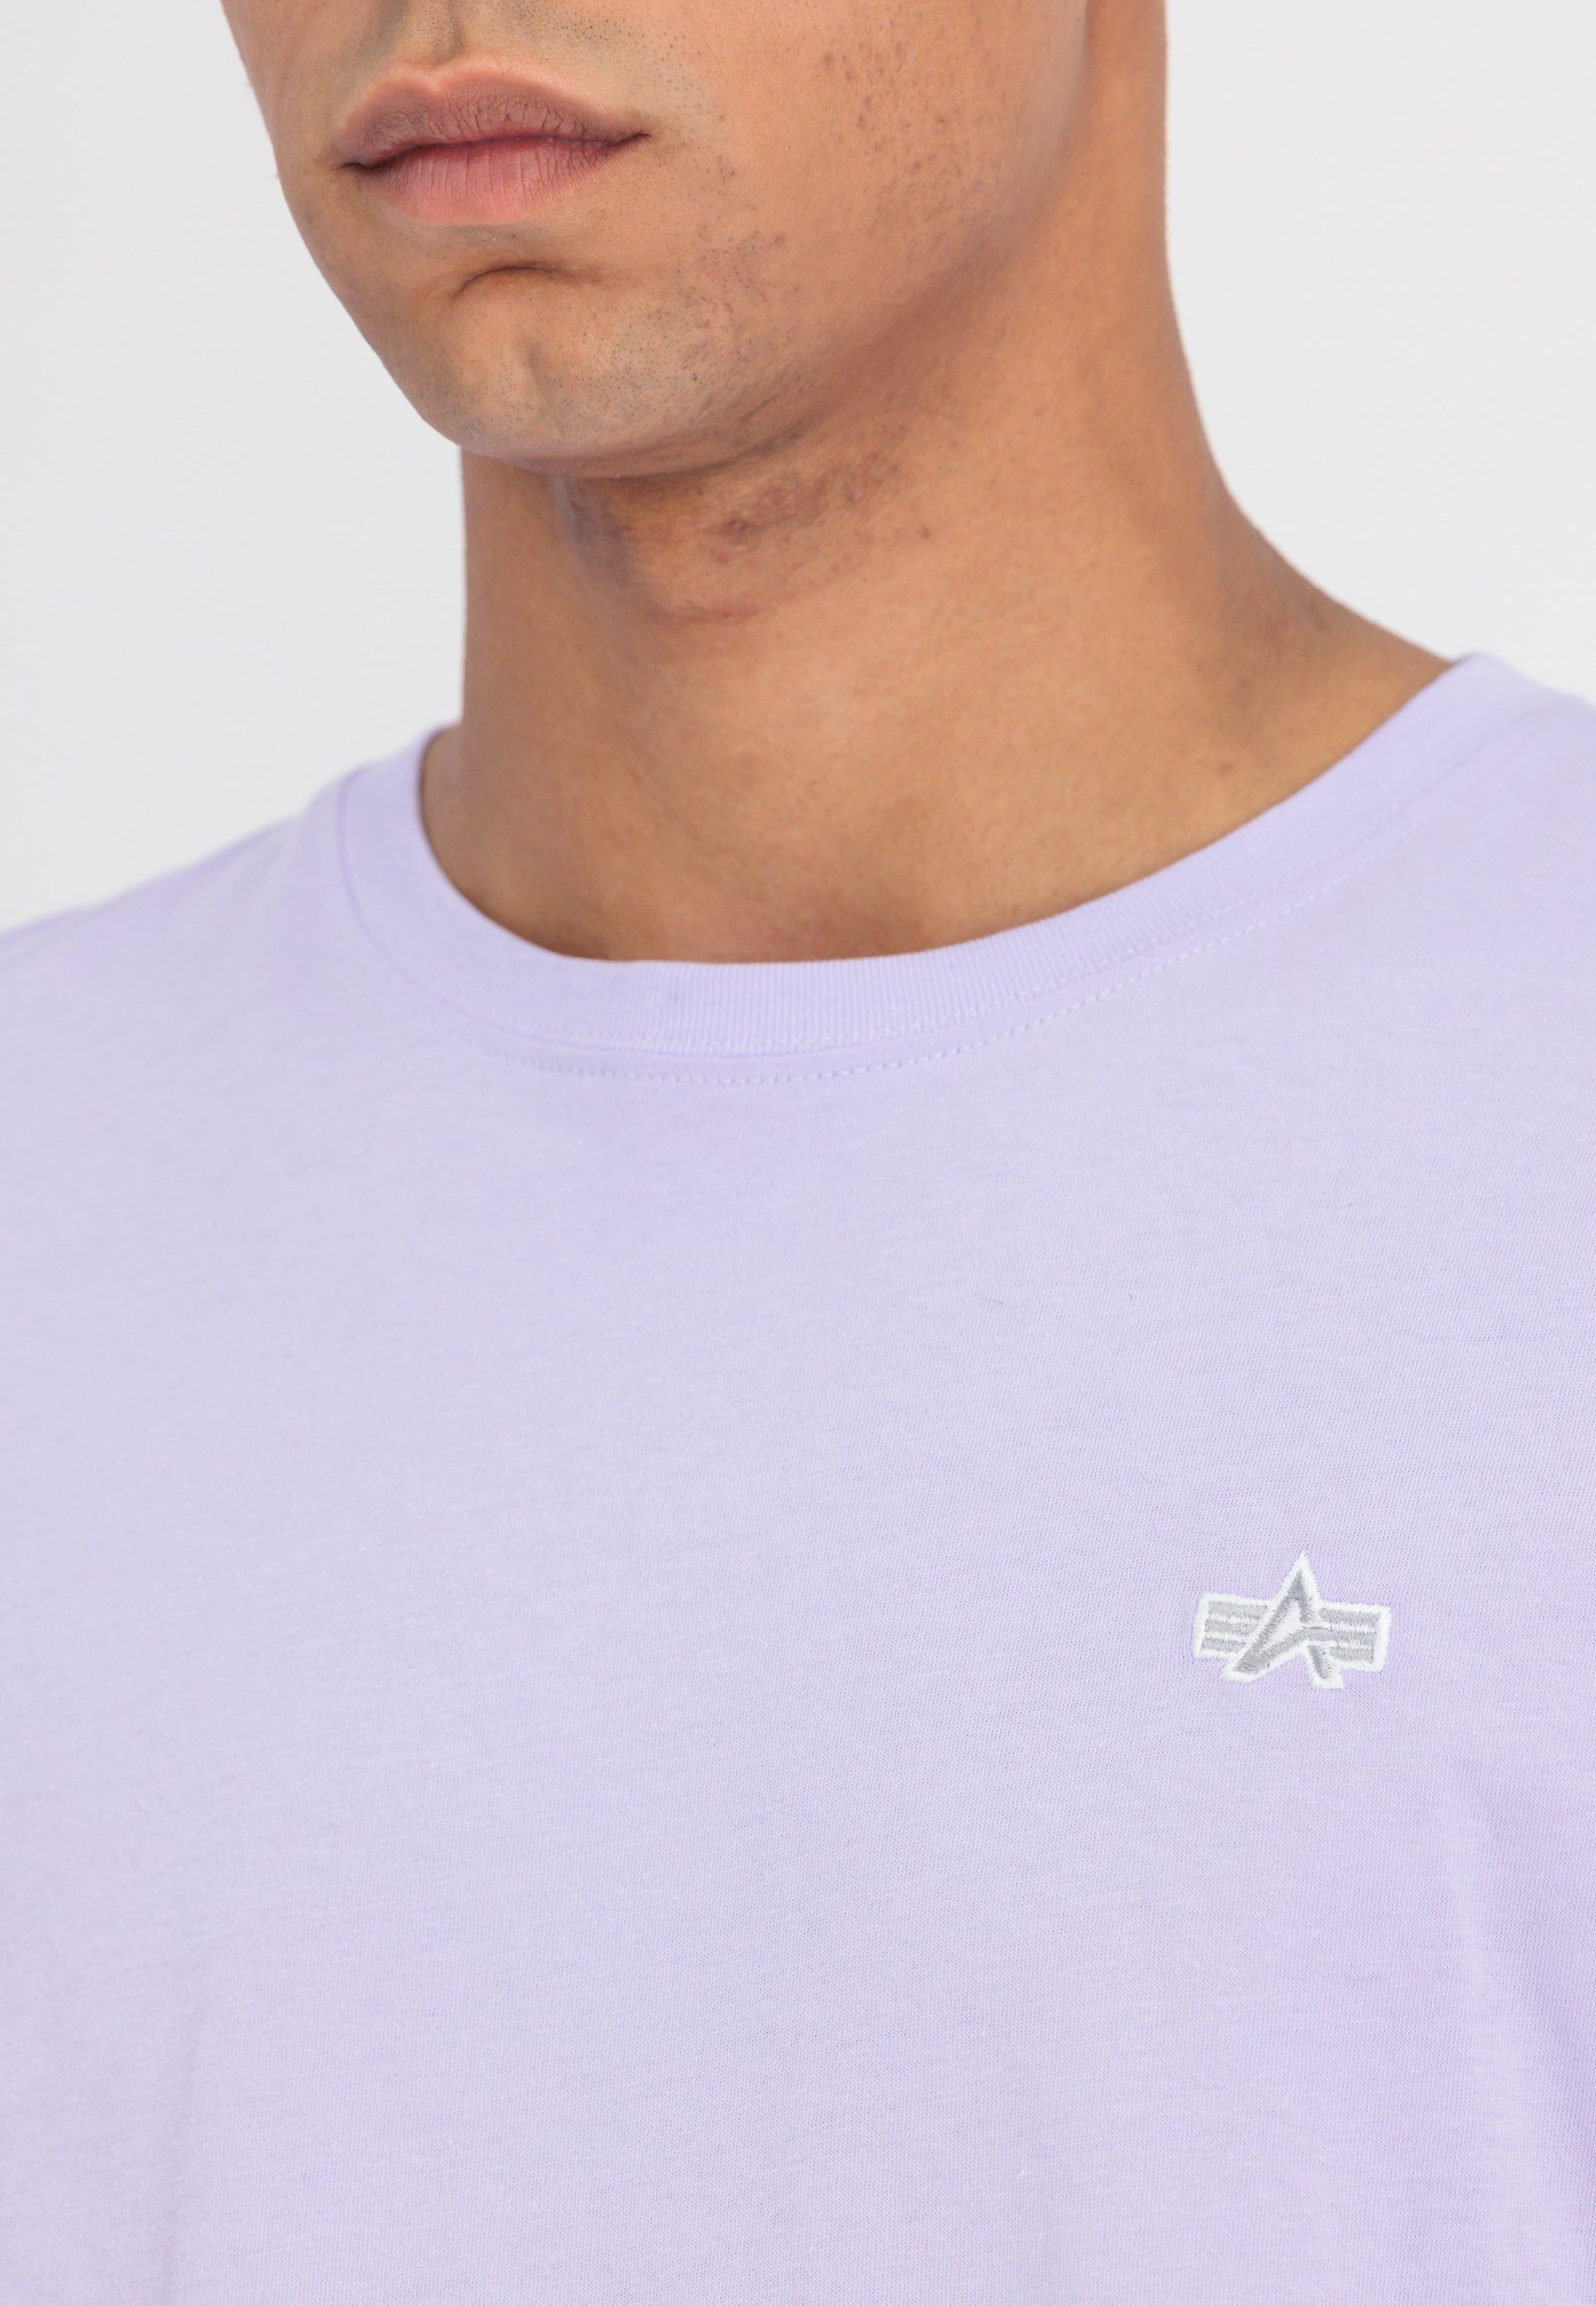 Alpha T-Shirts violet Industries - Unisex Industries T-Shirt pale Alpha Men EMB T-Shirt